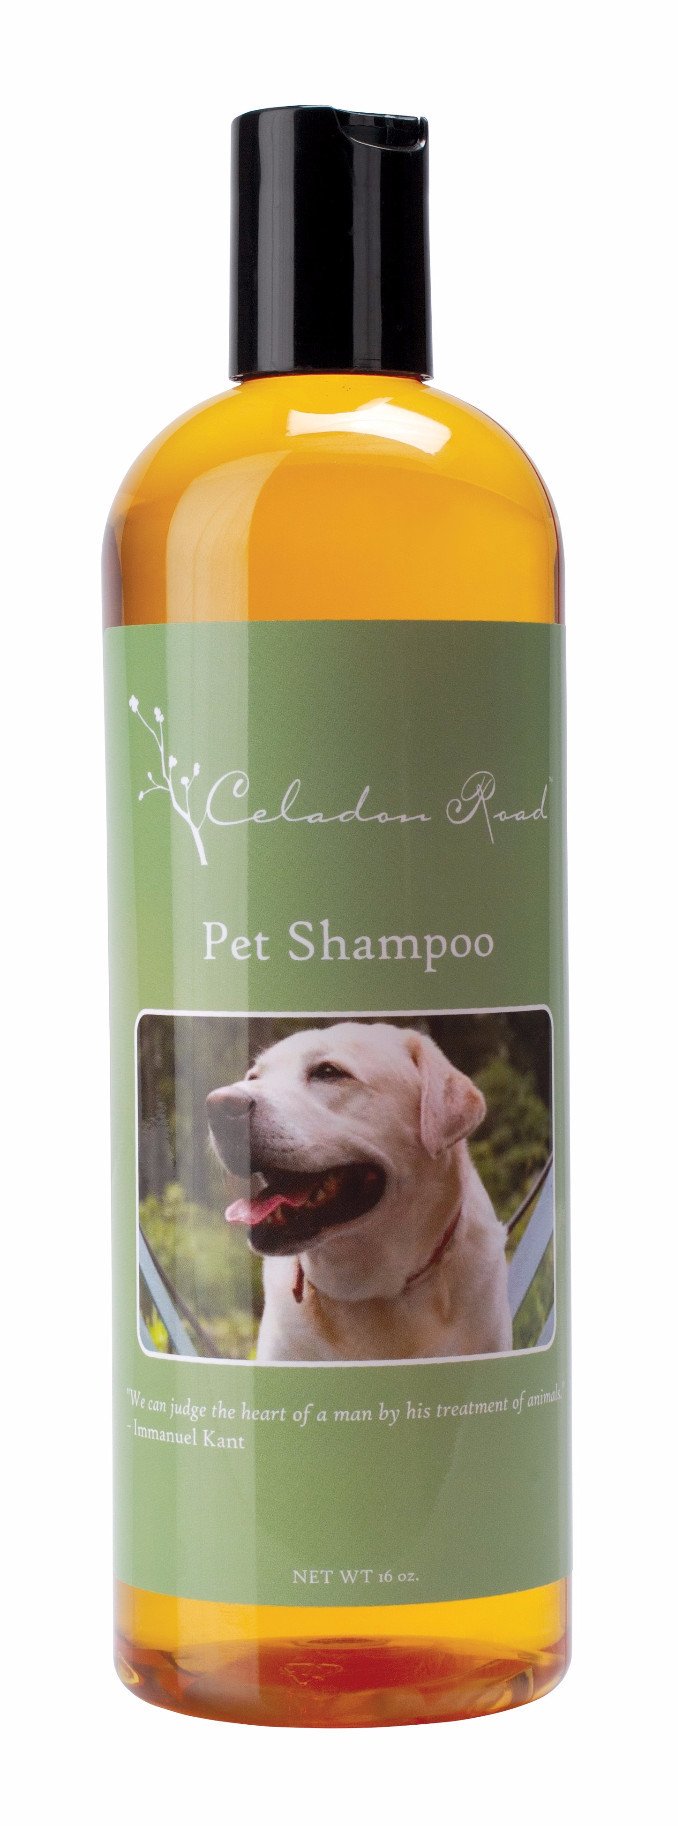 Pet Shampoo- Celadon Road- www.celadonroad.com